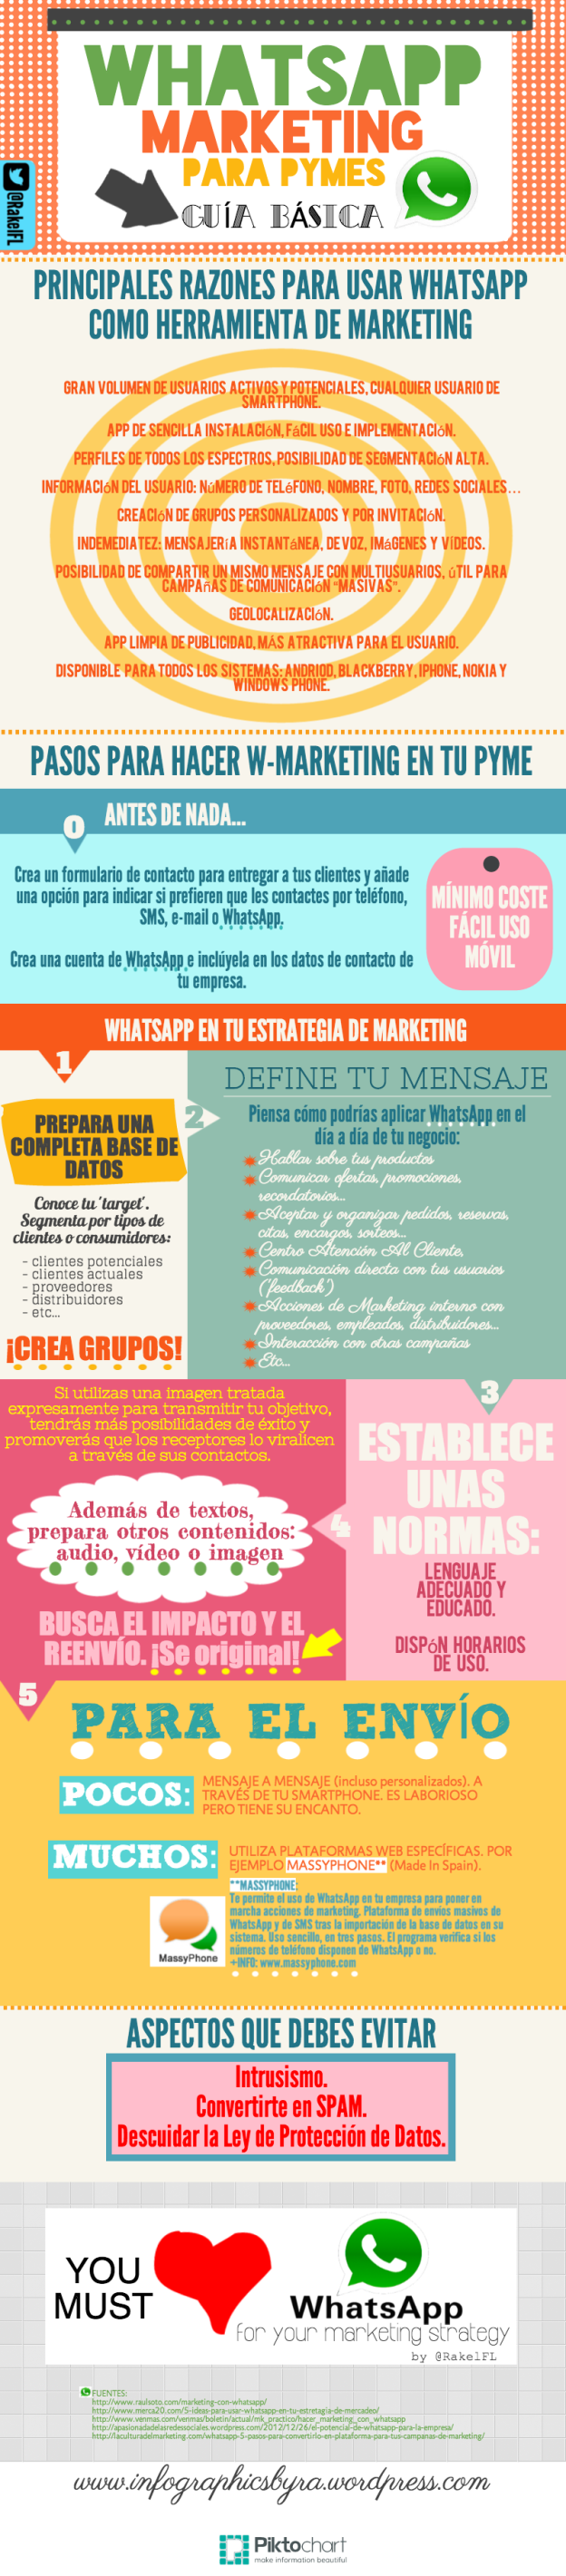 guia_marketing_con_whatsapp_marketing_experto